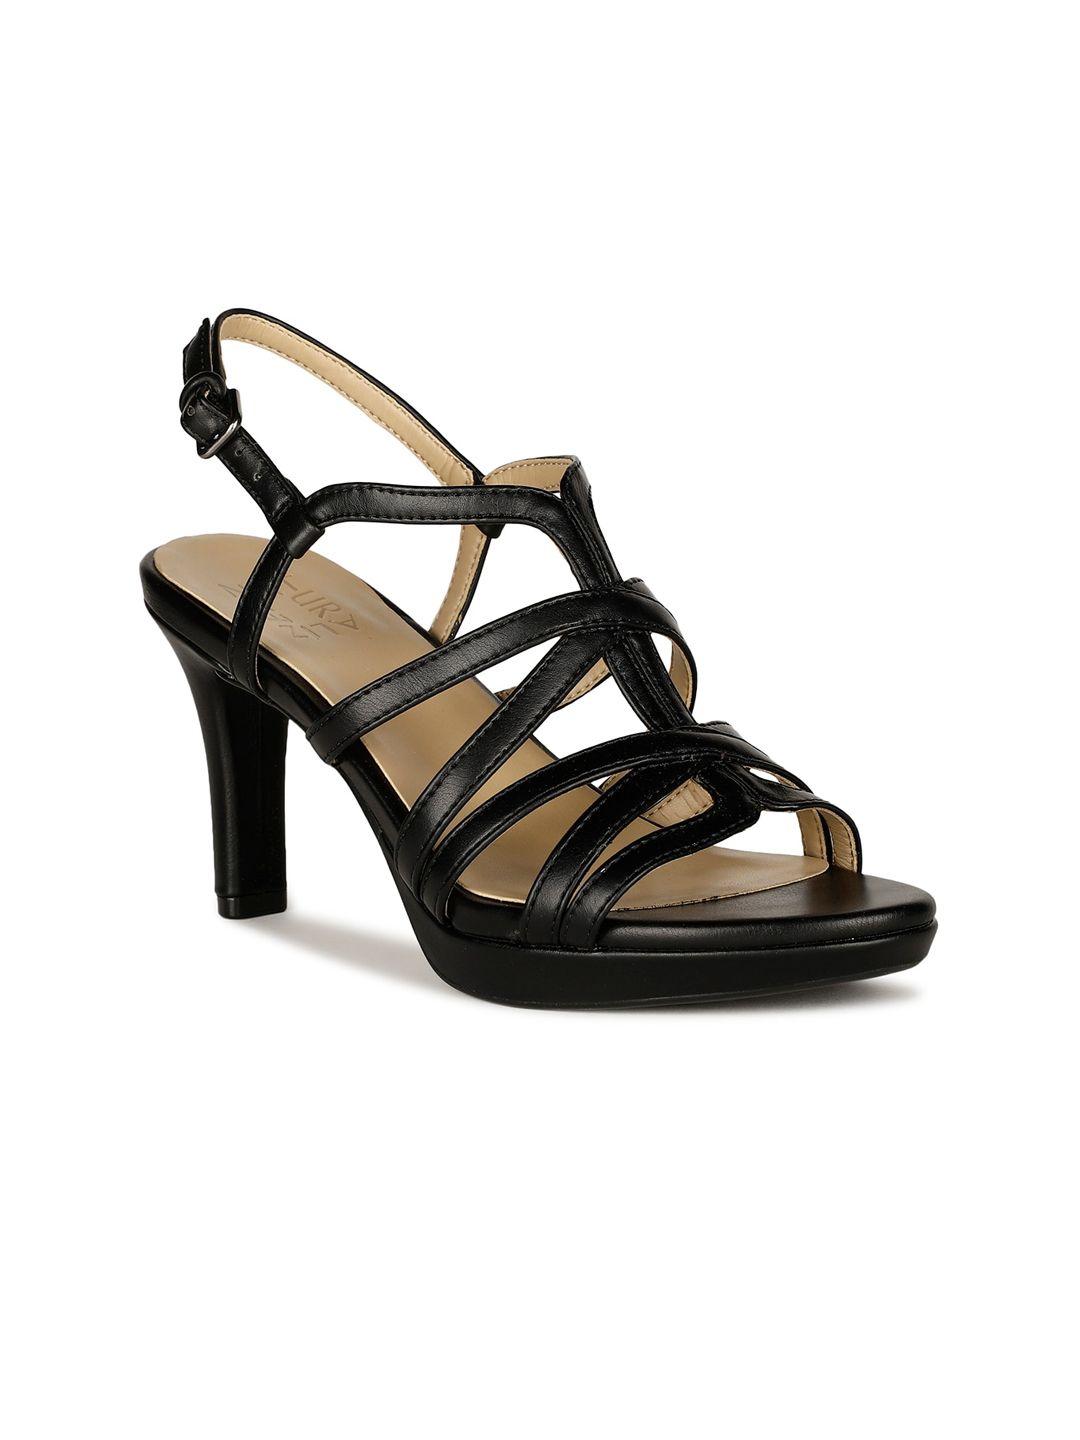 naturalizer-baylor-open-toe-leather-slim-heels-with-backstrap